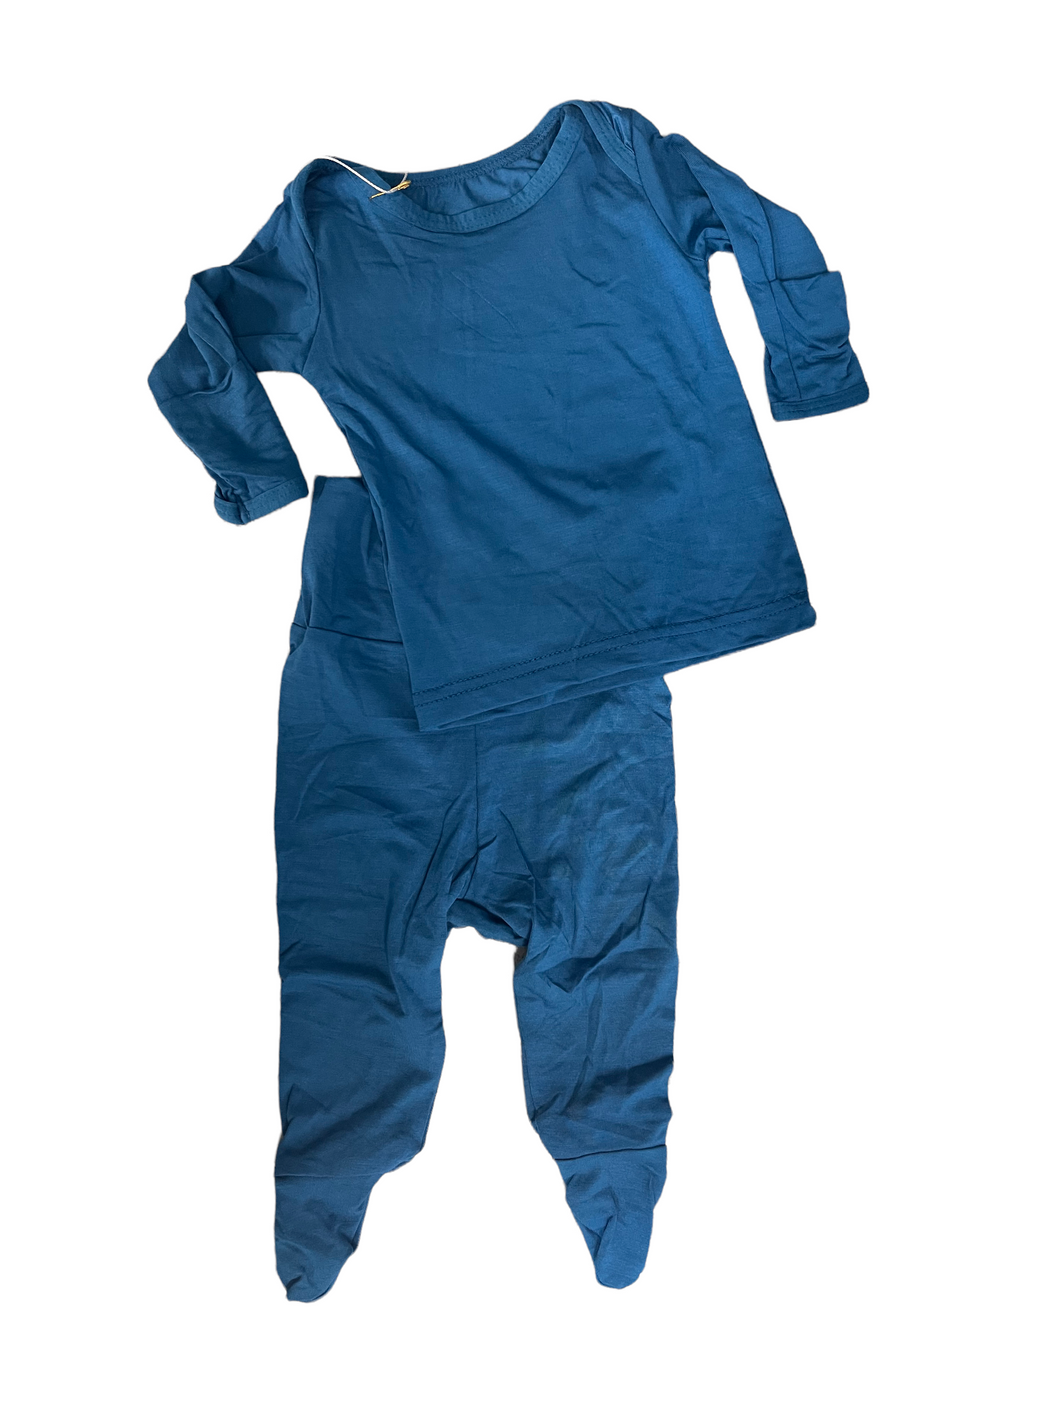 Blue Jammies Infant Pj's & Loungewear (0-3M)